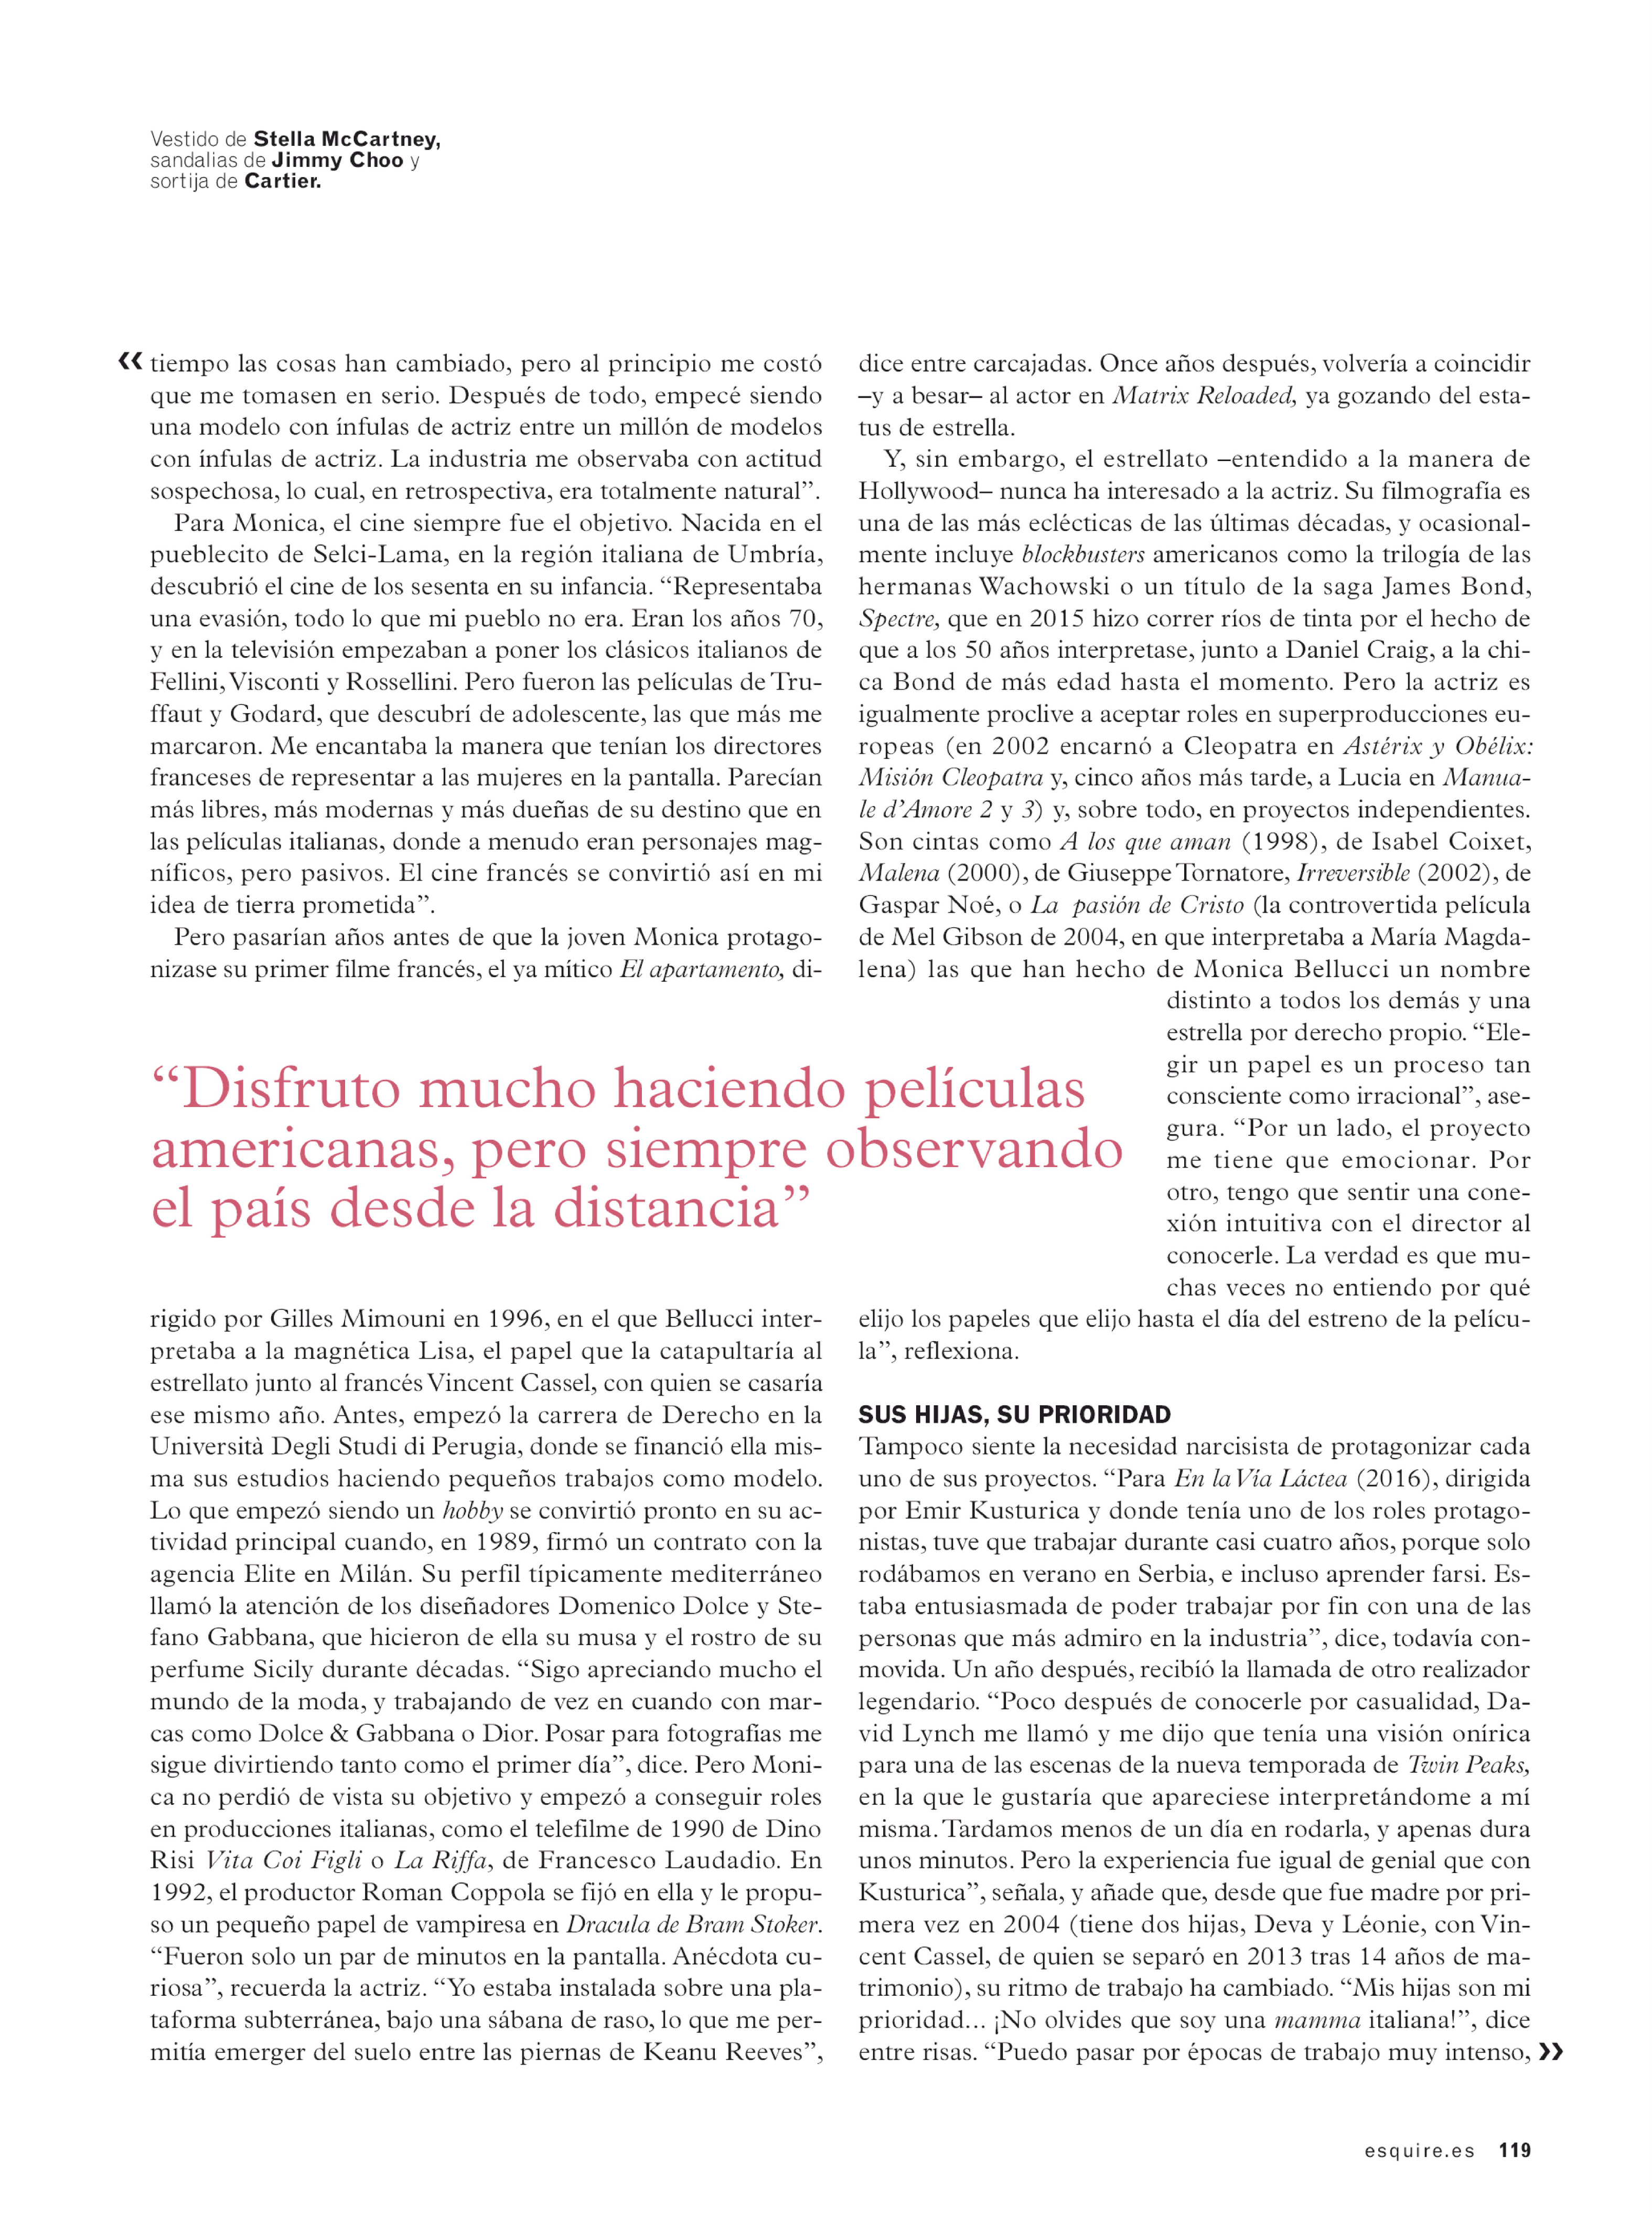 Monica Bellucci â€“ Esquire Spain Magazine (August 2018)